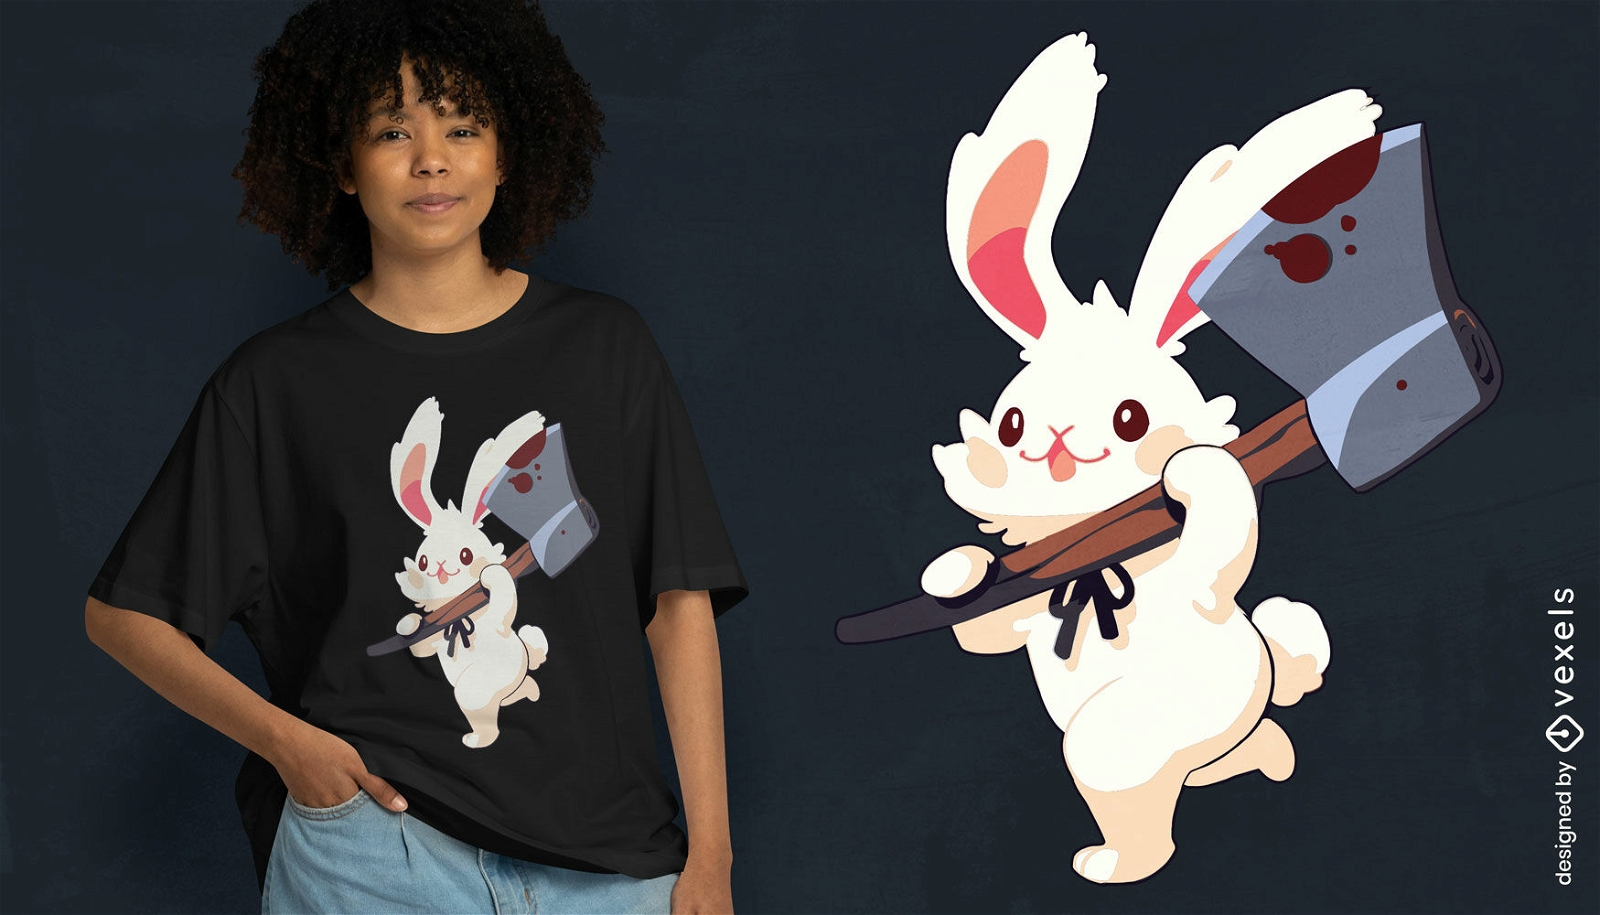 Cute bunny with an axe t.shirt design